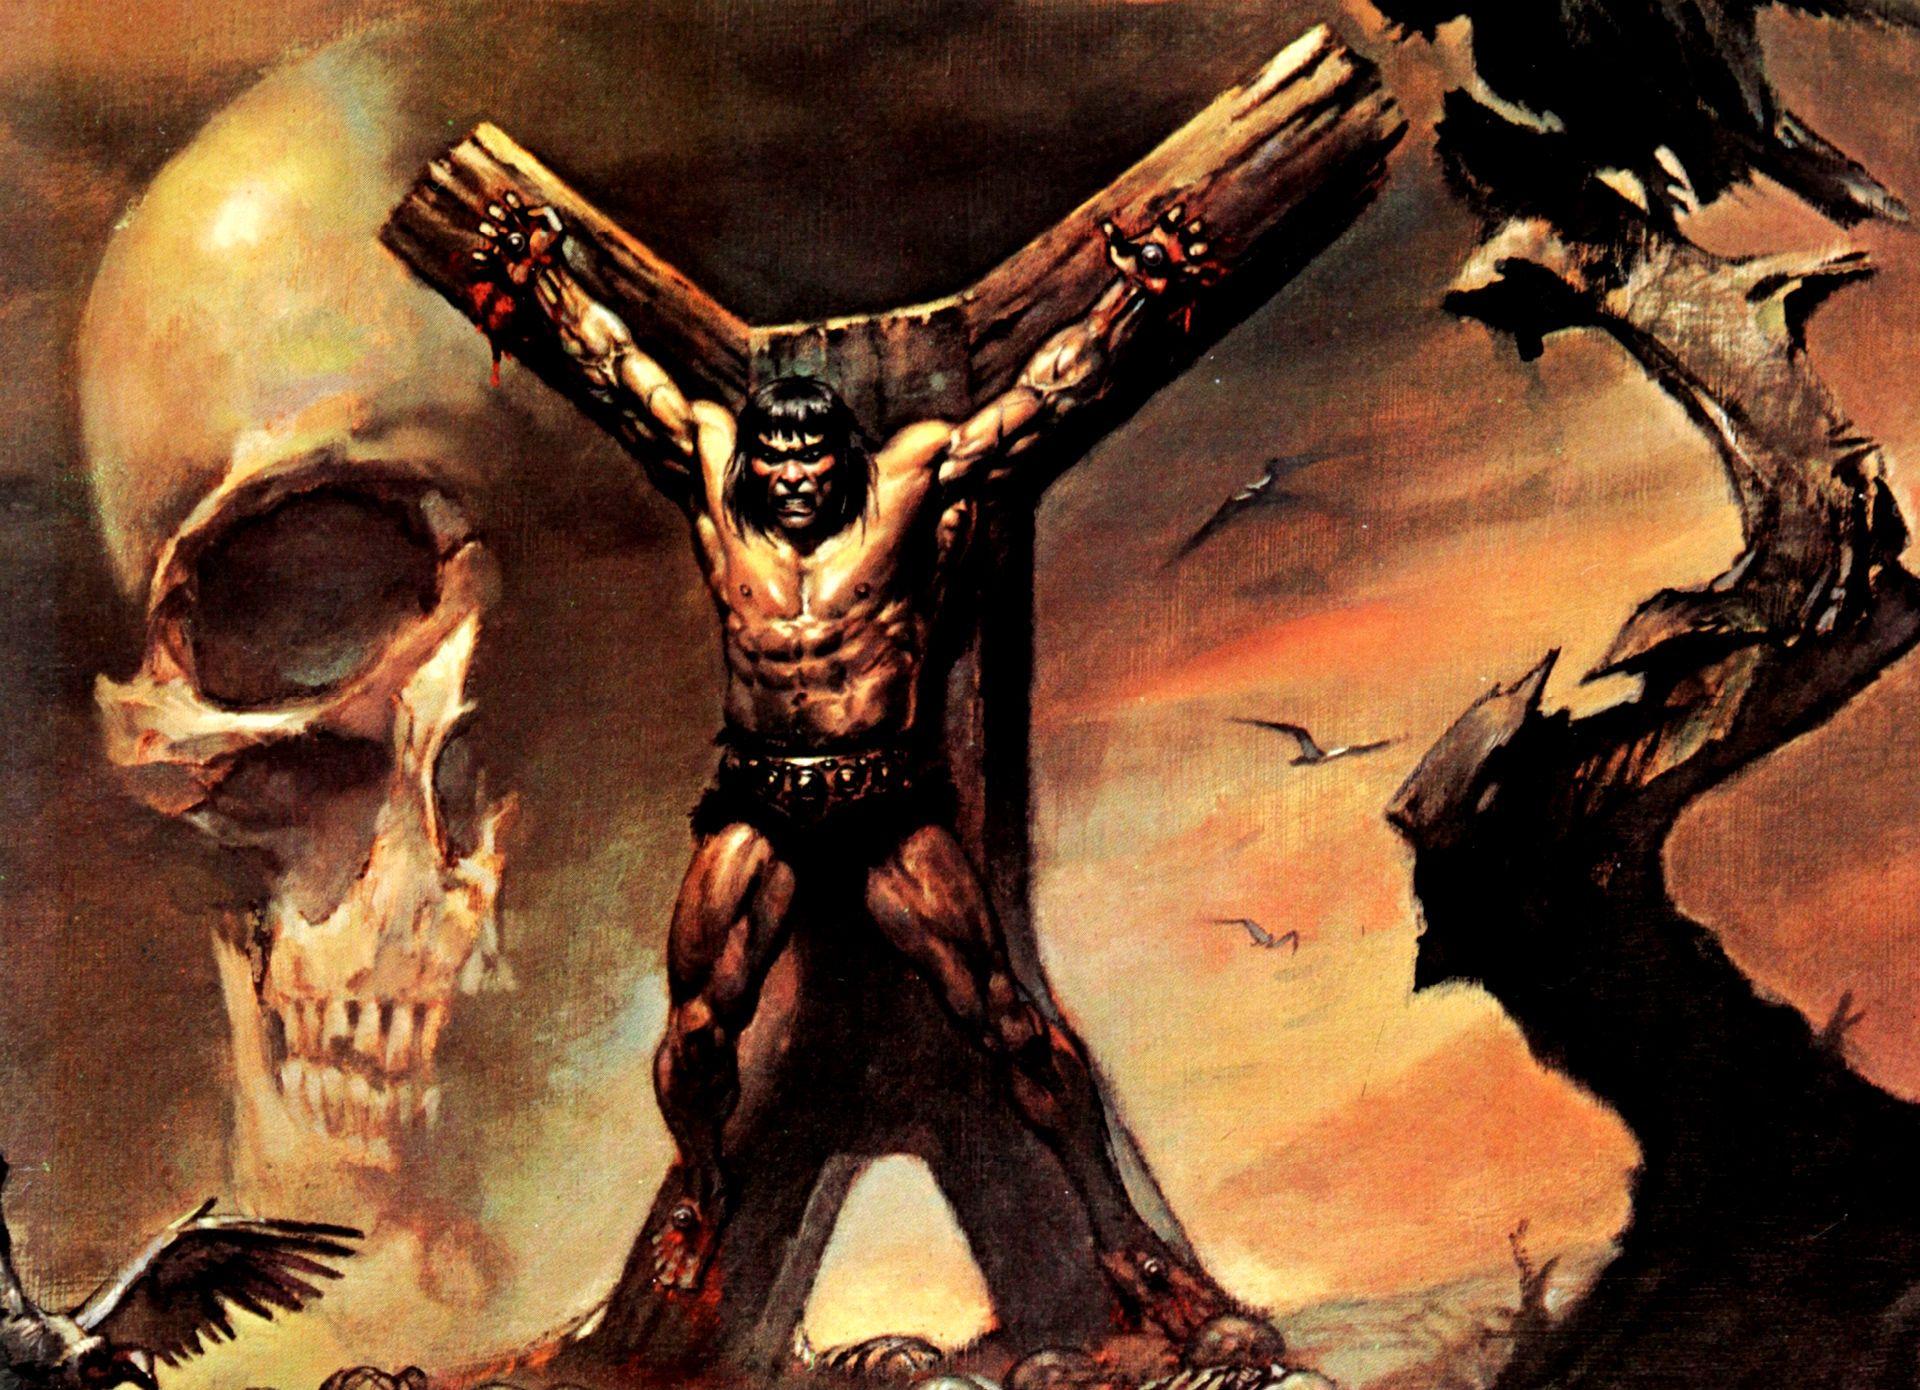 Conan the Barbarian Wallpaper. Displaying 19> Image For